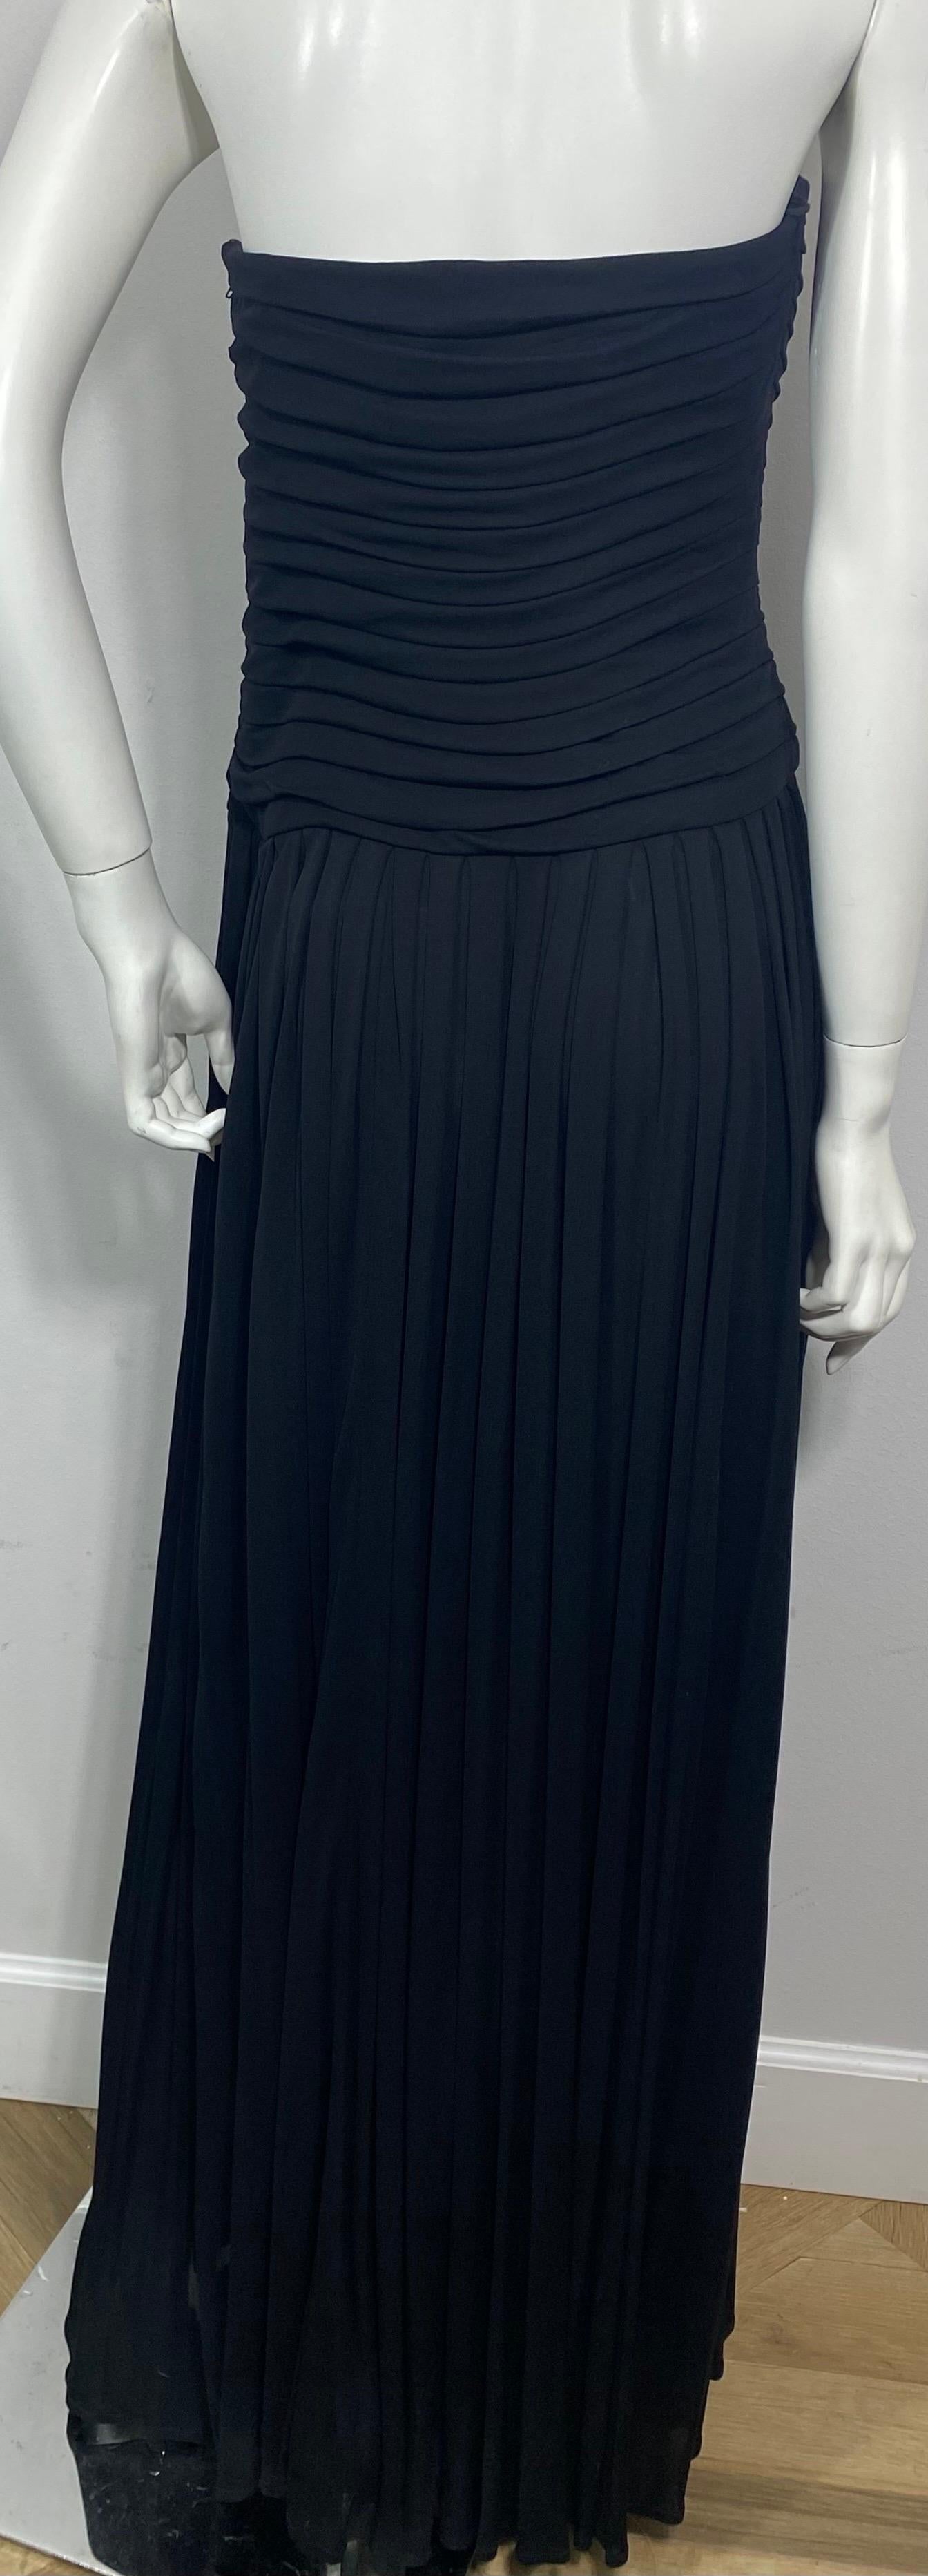 Lanvin 1970’s Black Shutter Pleat Matte Jersey Strapless Long Dress-Size 40 For Sale 4